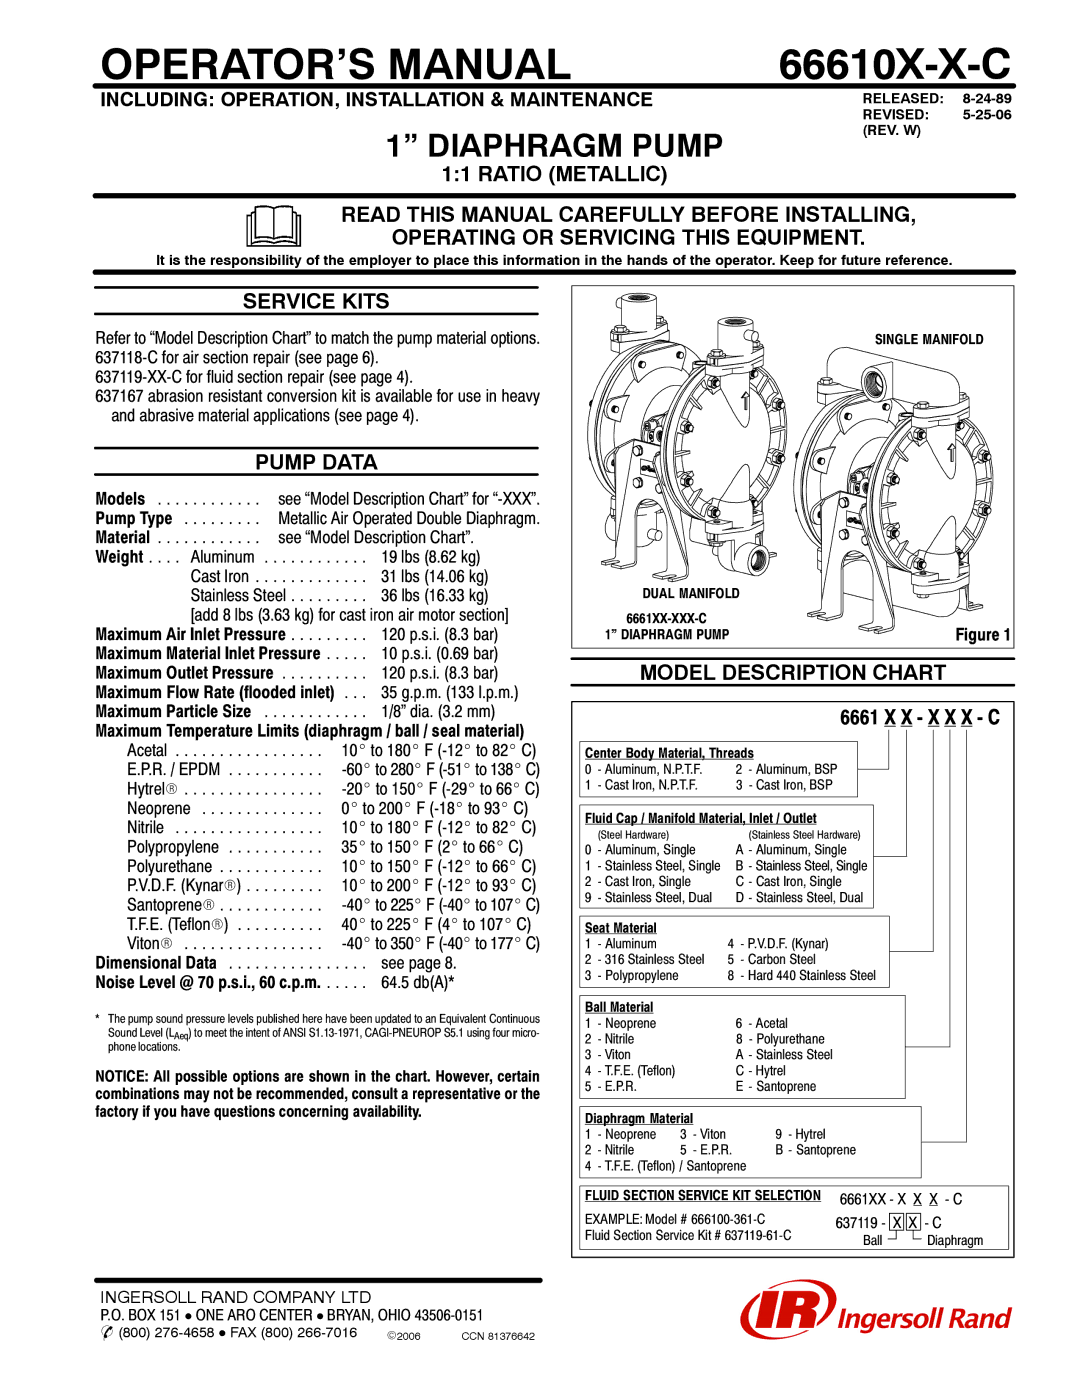 Ingersoll-Rand 66610X-X-C manual Ratio Metallic, Service Kits, Pump Data, Model Description Chart 